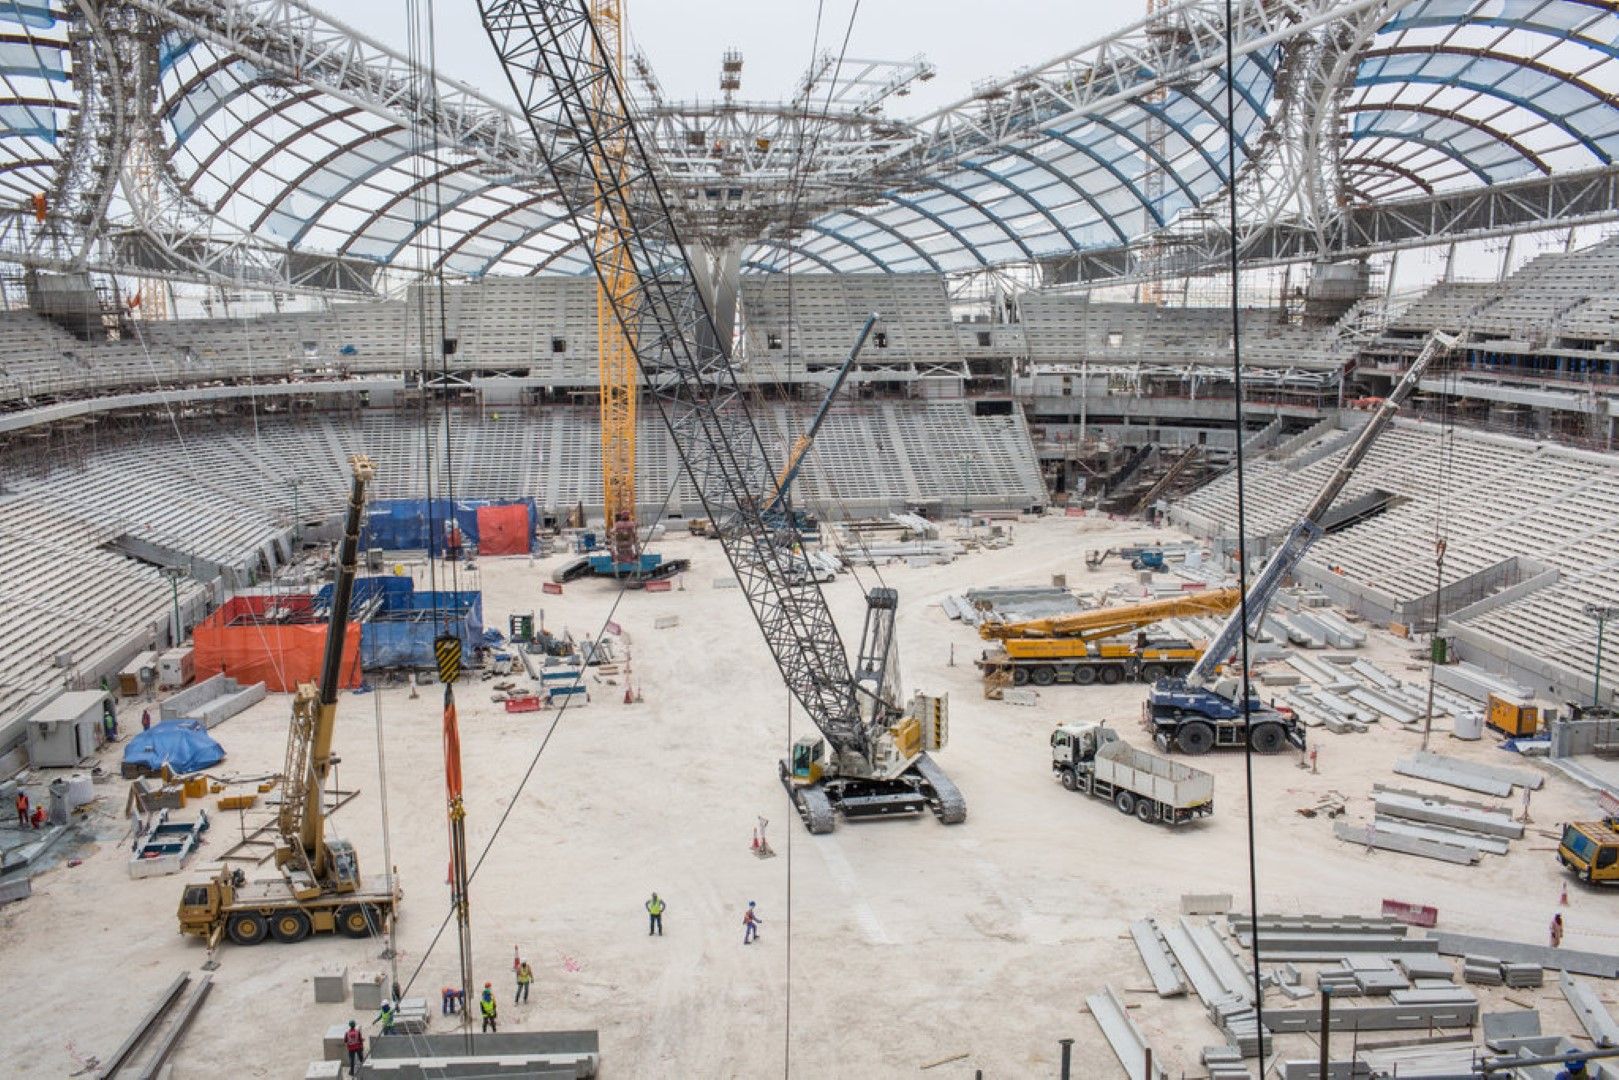 Qatar Foundation Stadium